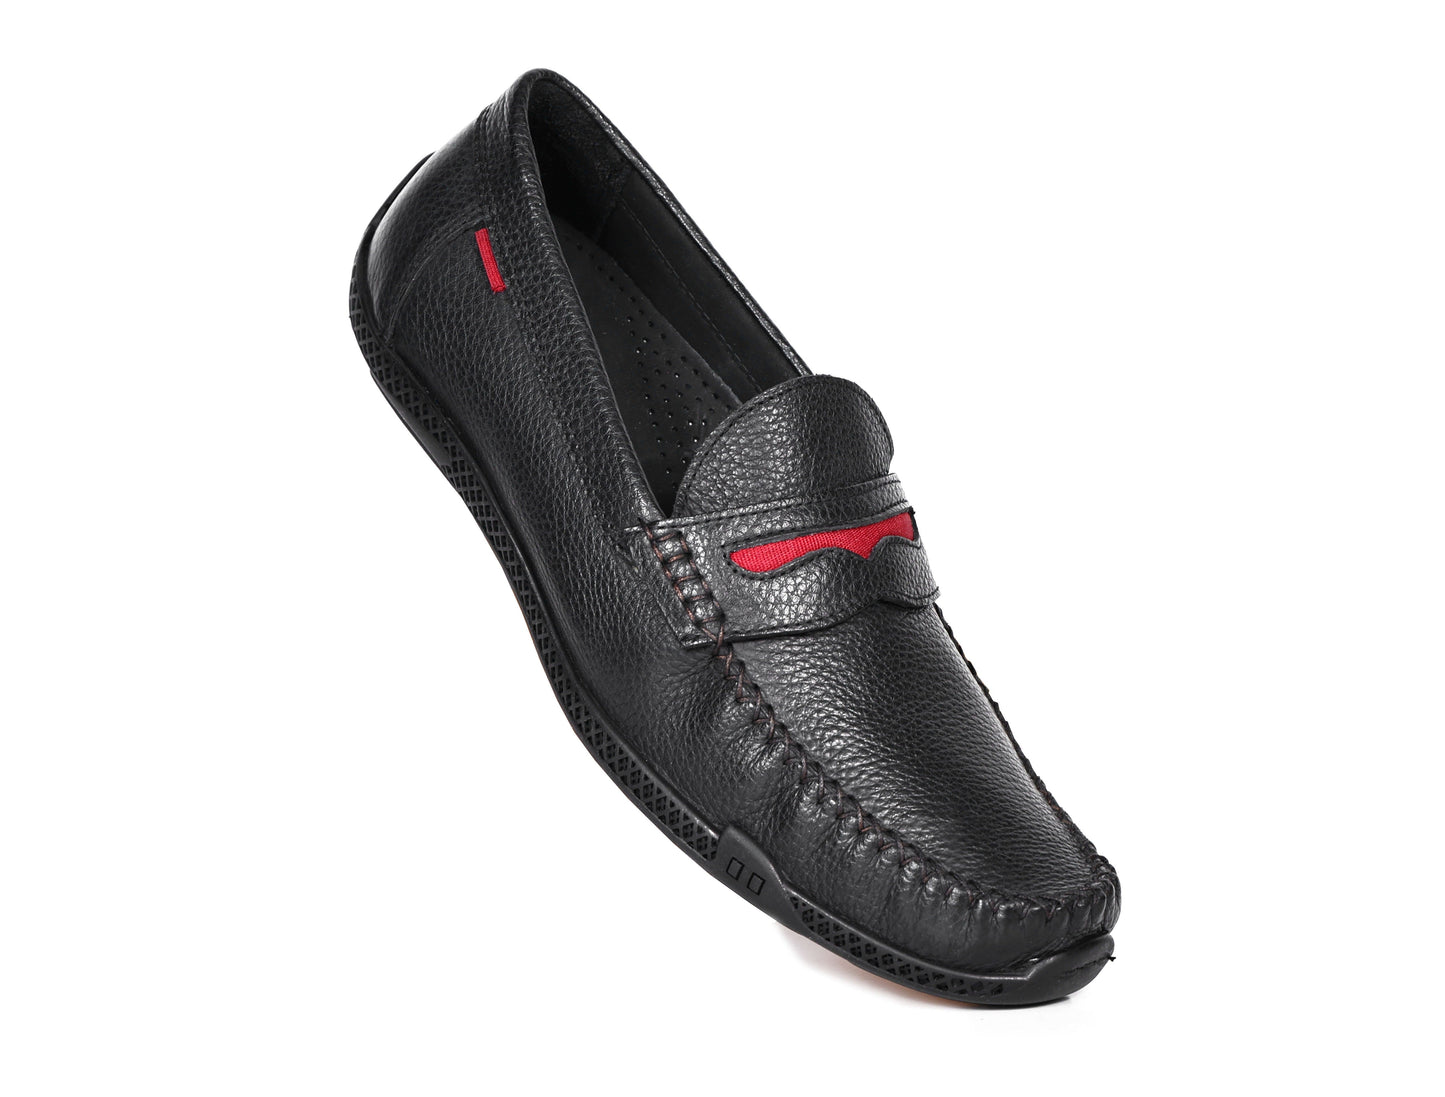 "Classic Comfort: Black Casual Leather Shoes" Art: LS-1103